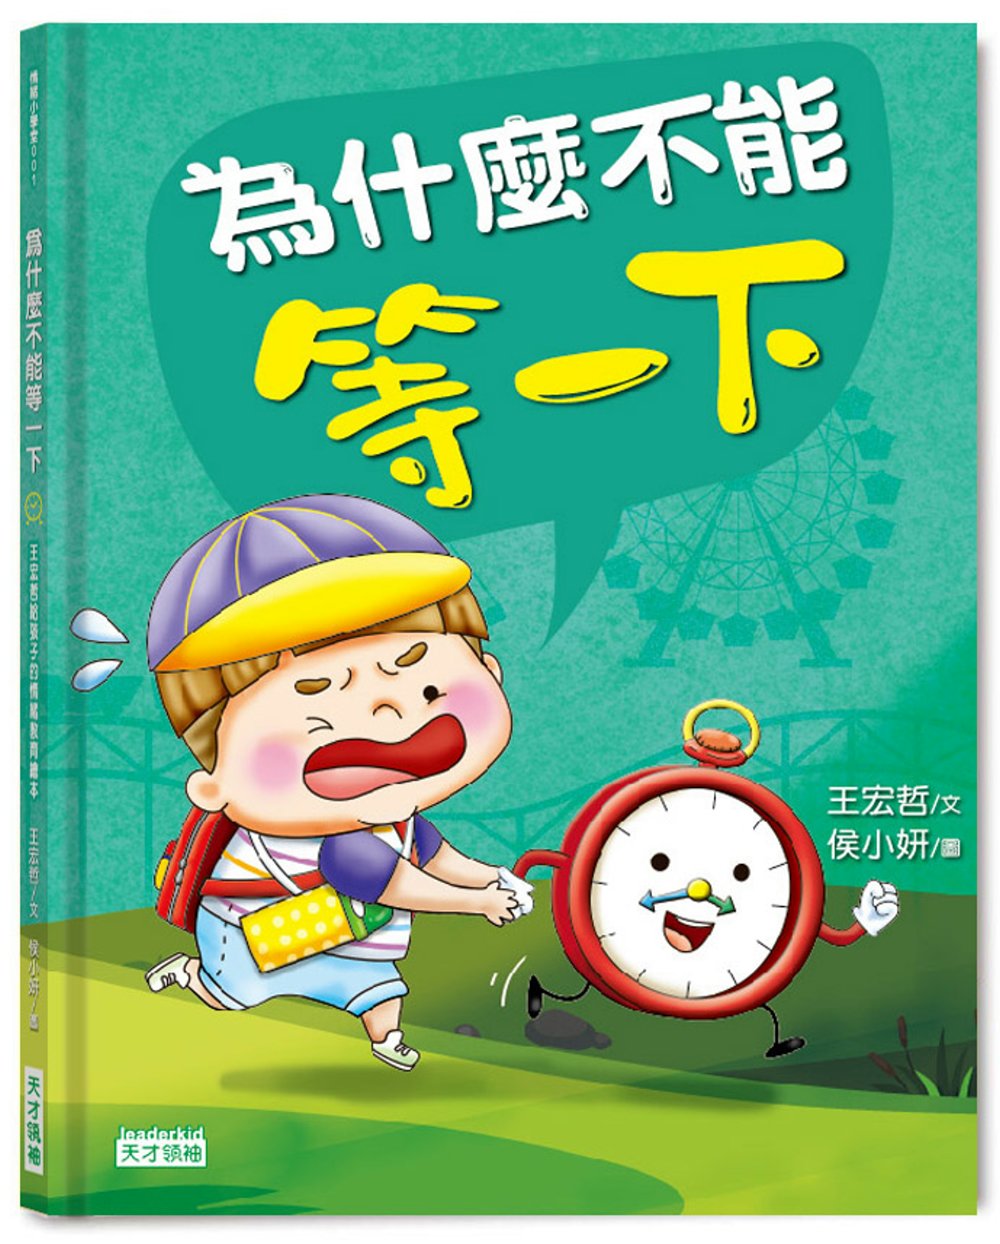 Why Can't You Wait? • 為什麼不能等一下：王宏哲給孩子的情緒教育繪本